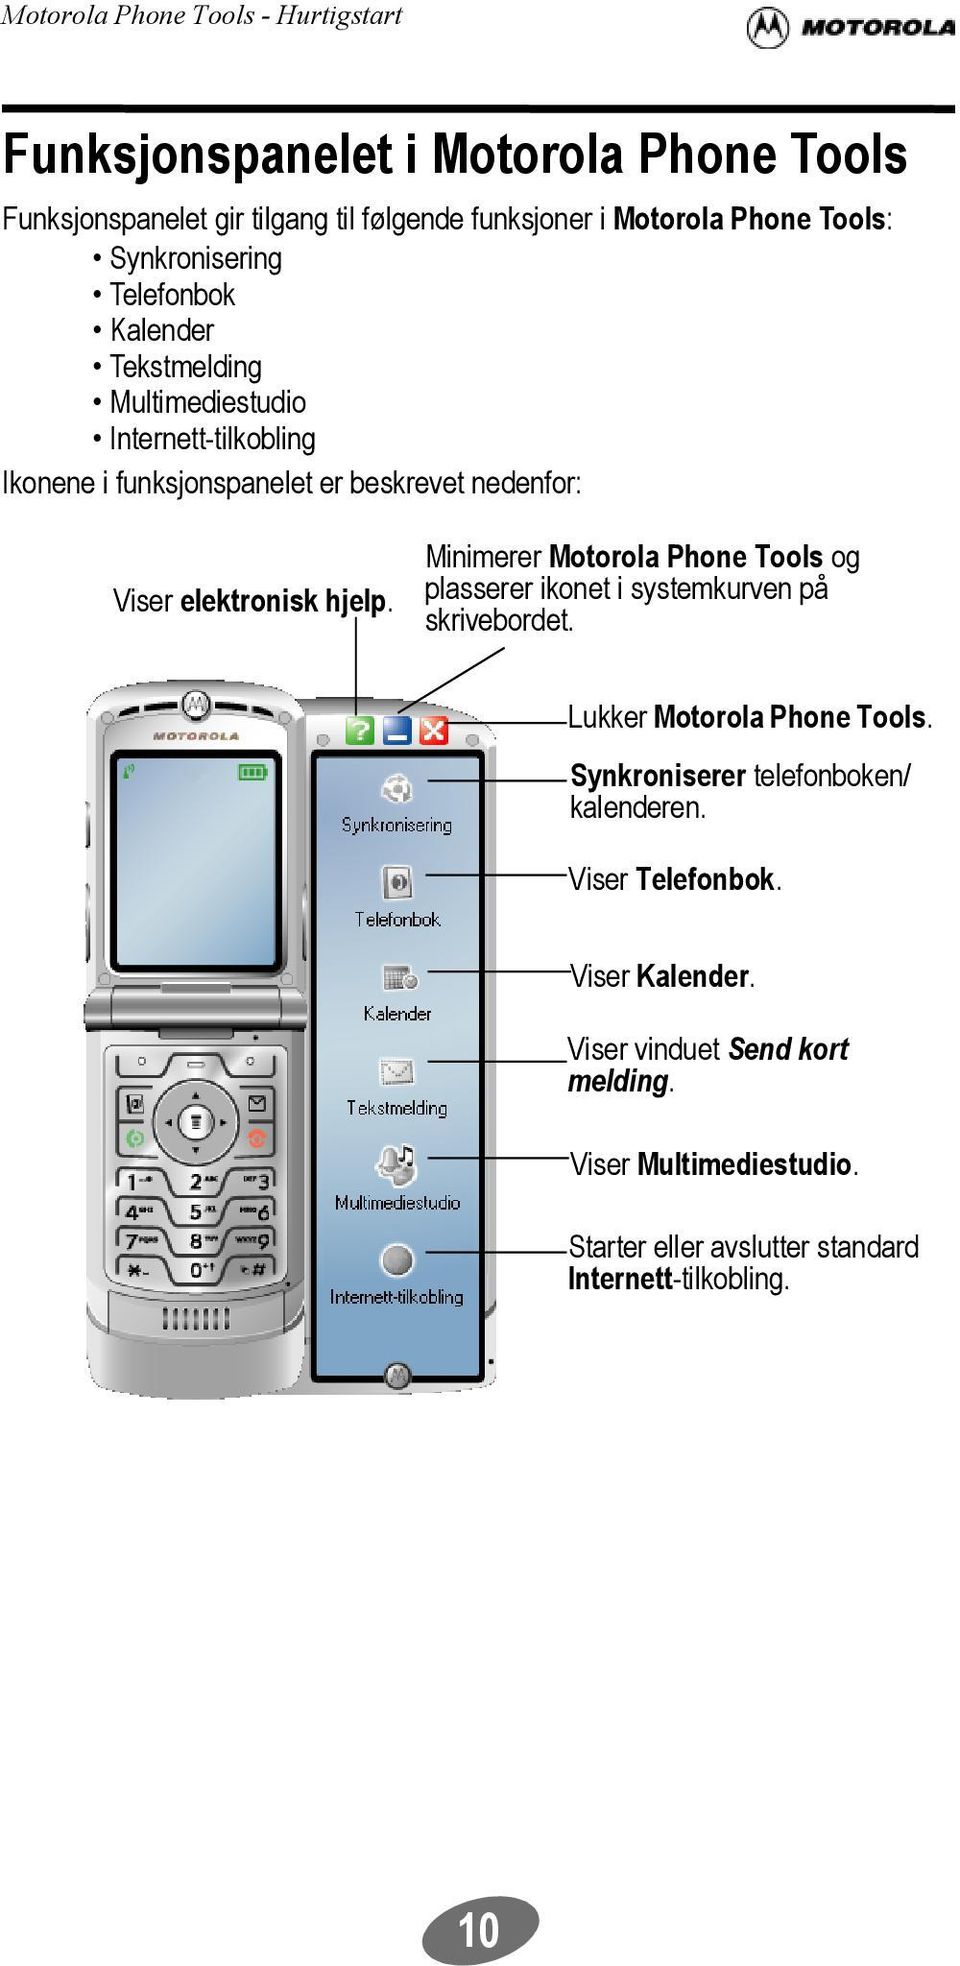 Minimerer Motorola Phone Tools og plasserer ikonet i systemkurven på skrivebordet. Lukker Motorola Phone Tools.